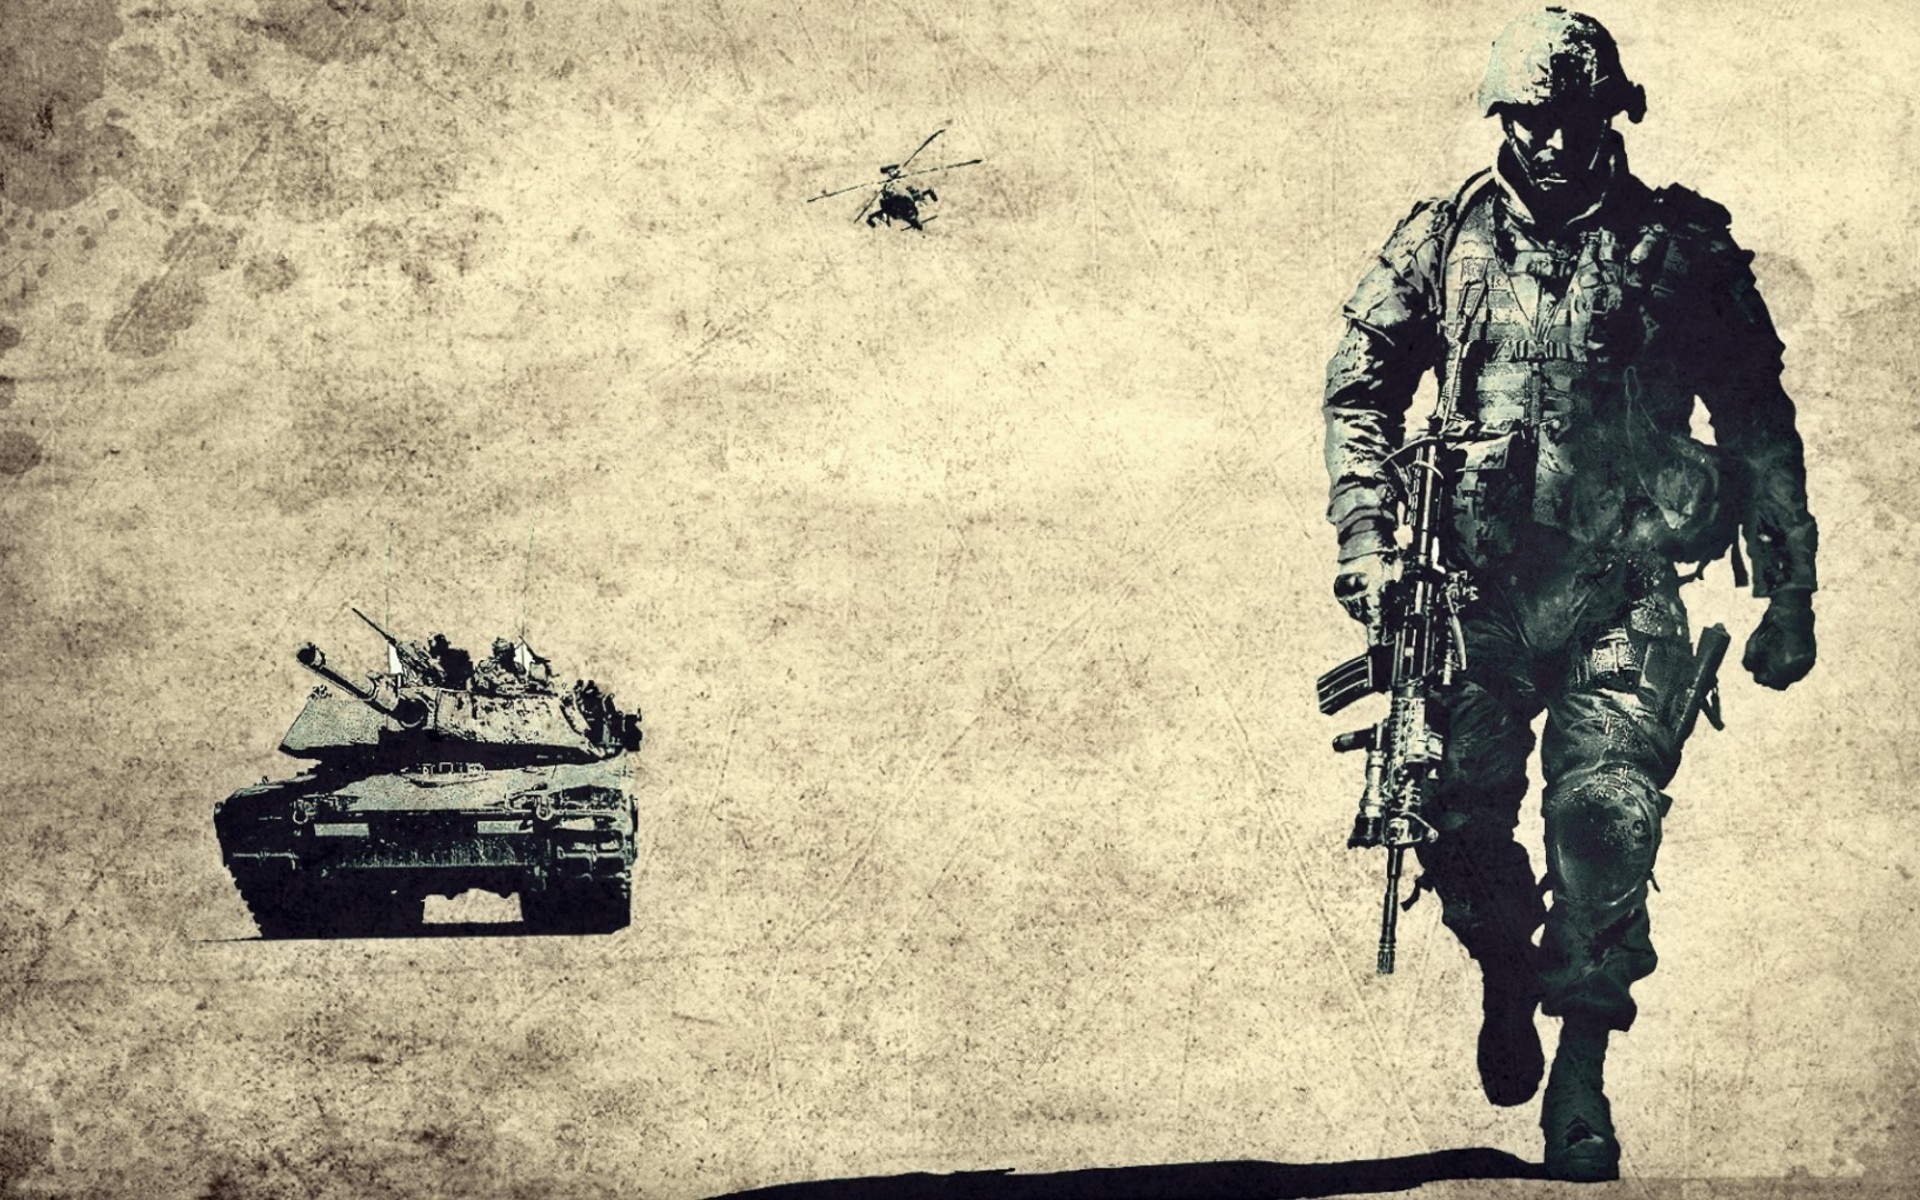 [48+] Awesome Military Wallpapers on WallpaperSafari